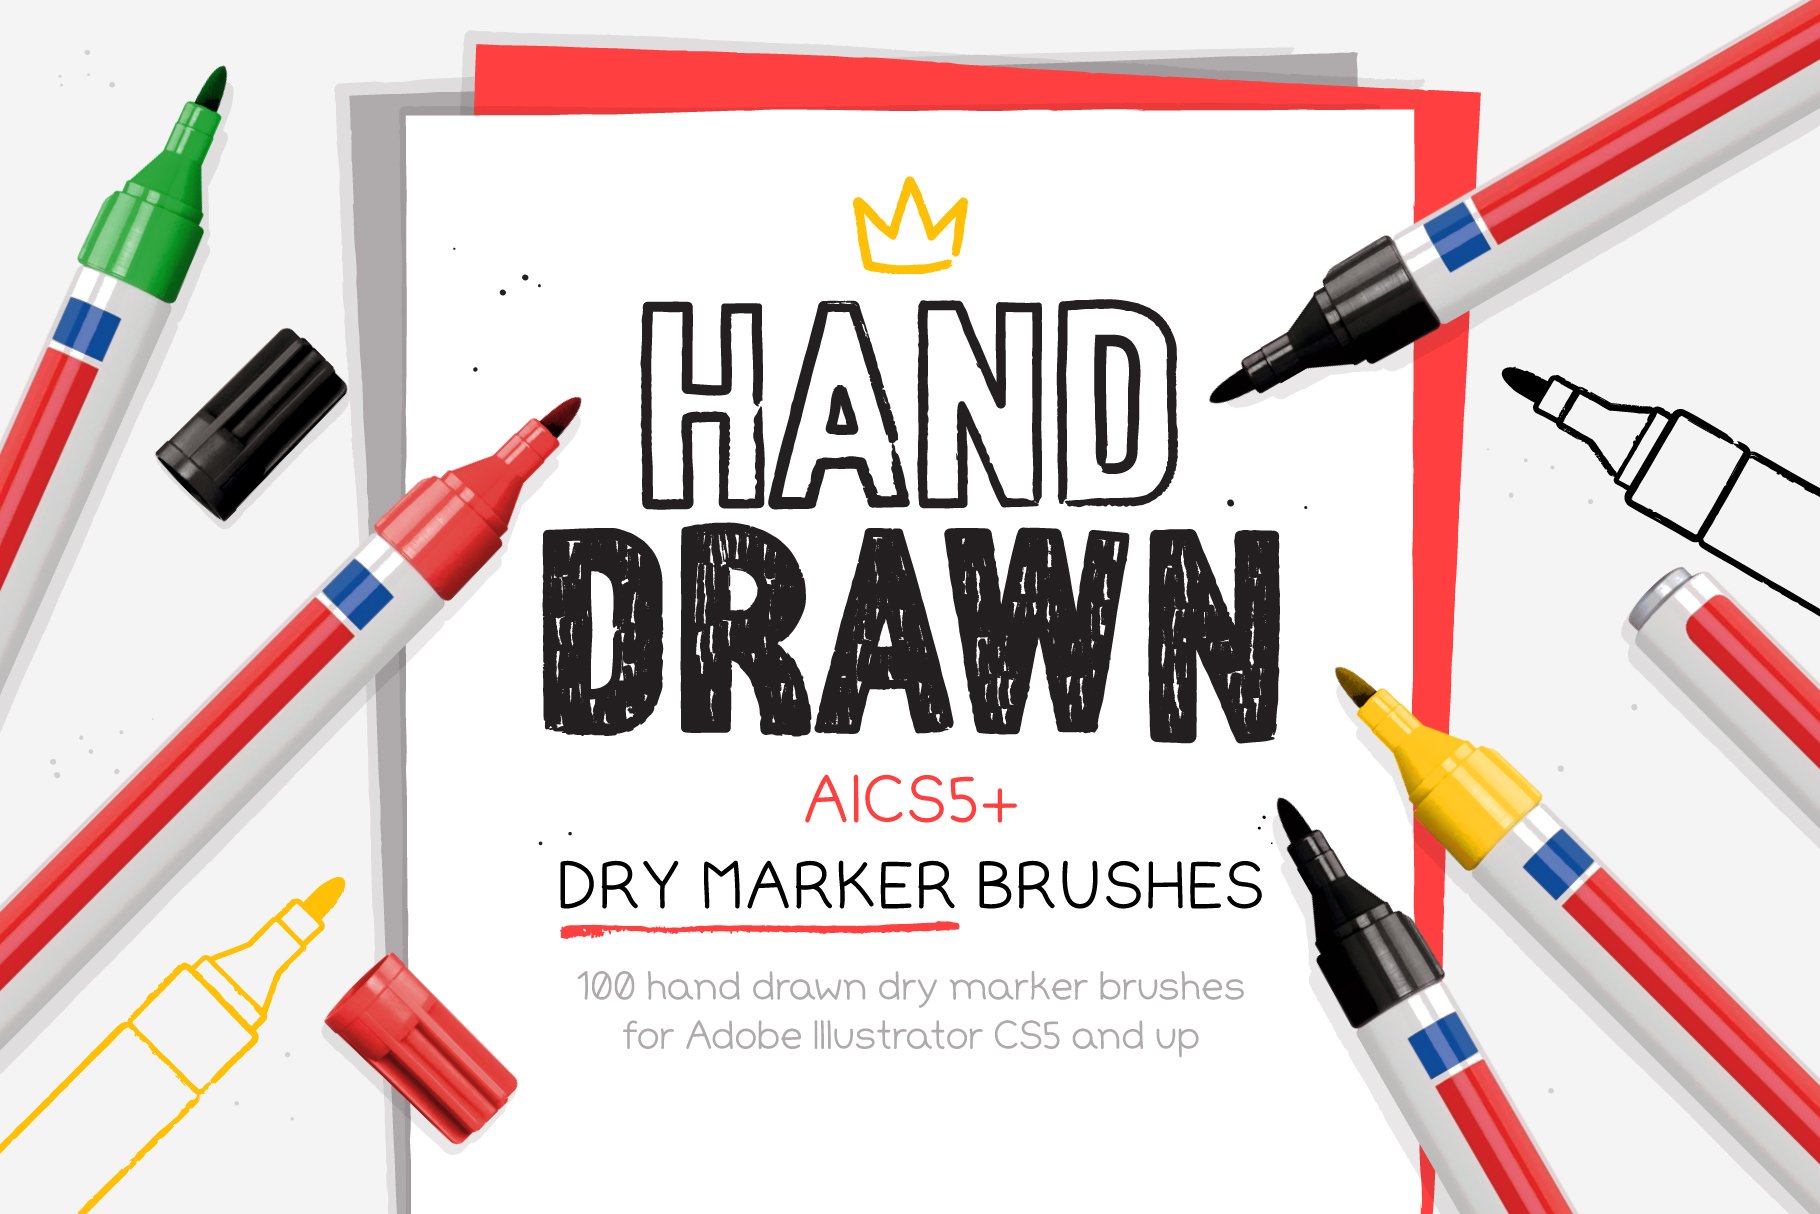 600 Vector Ink Line Art Brushes - Design Cuts